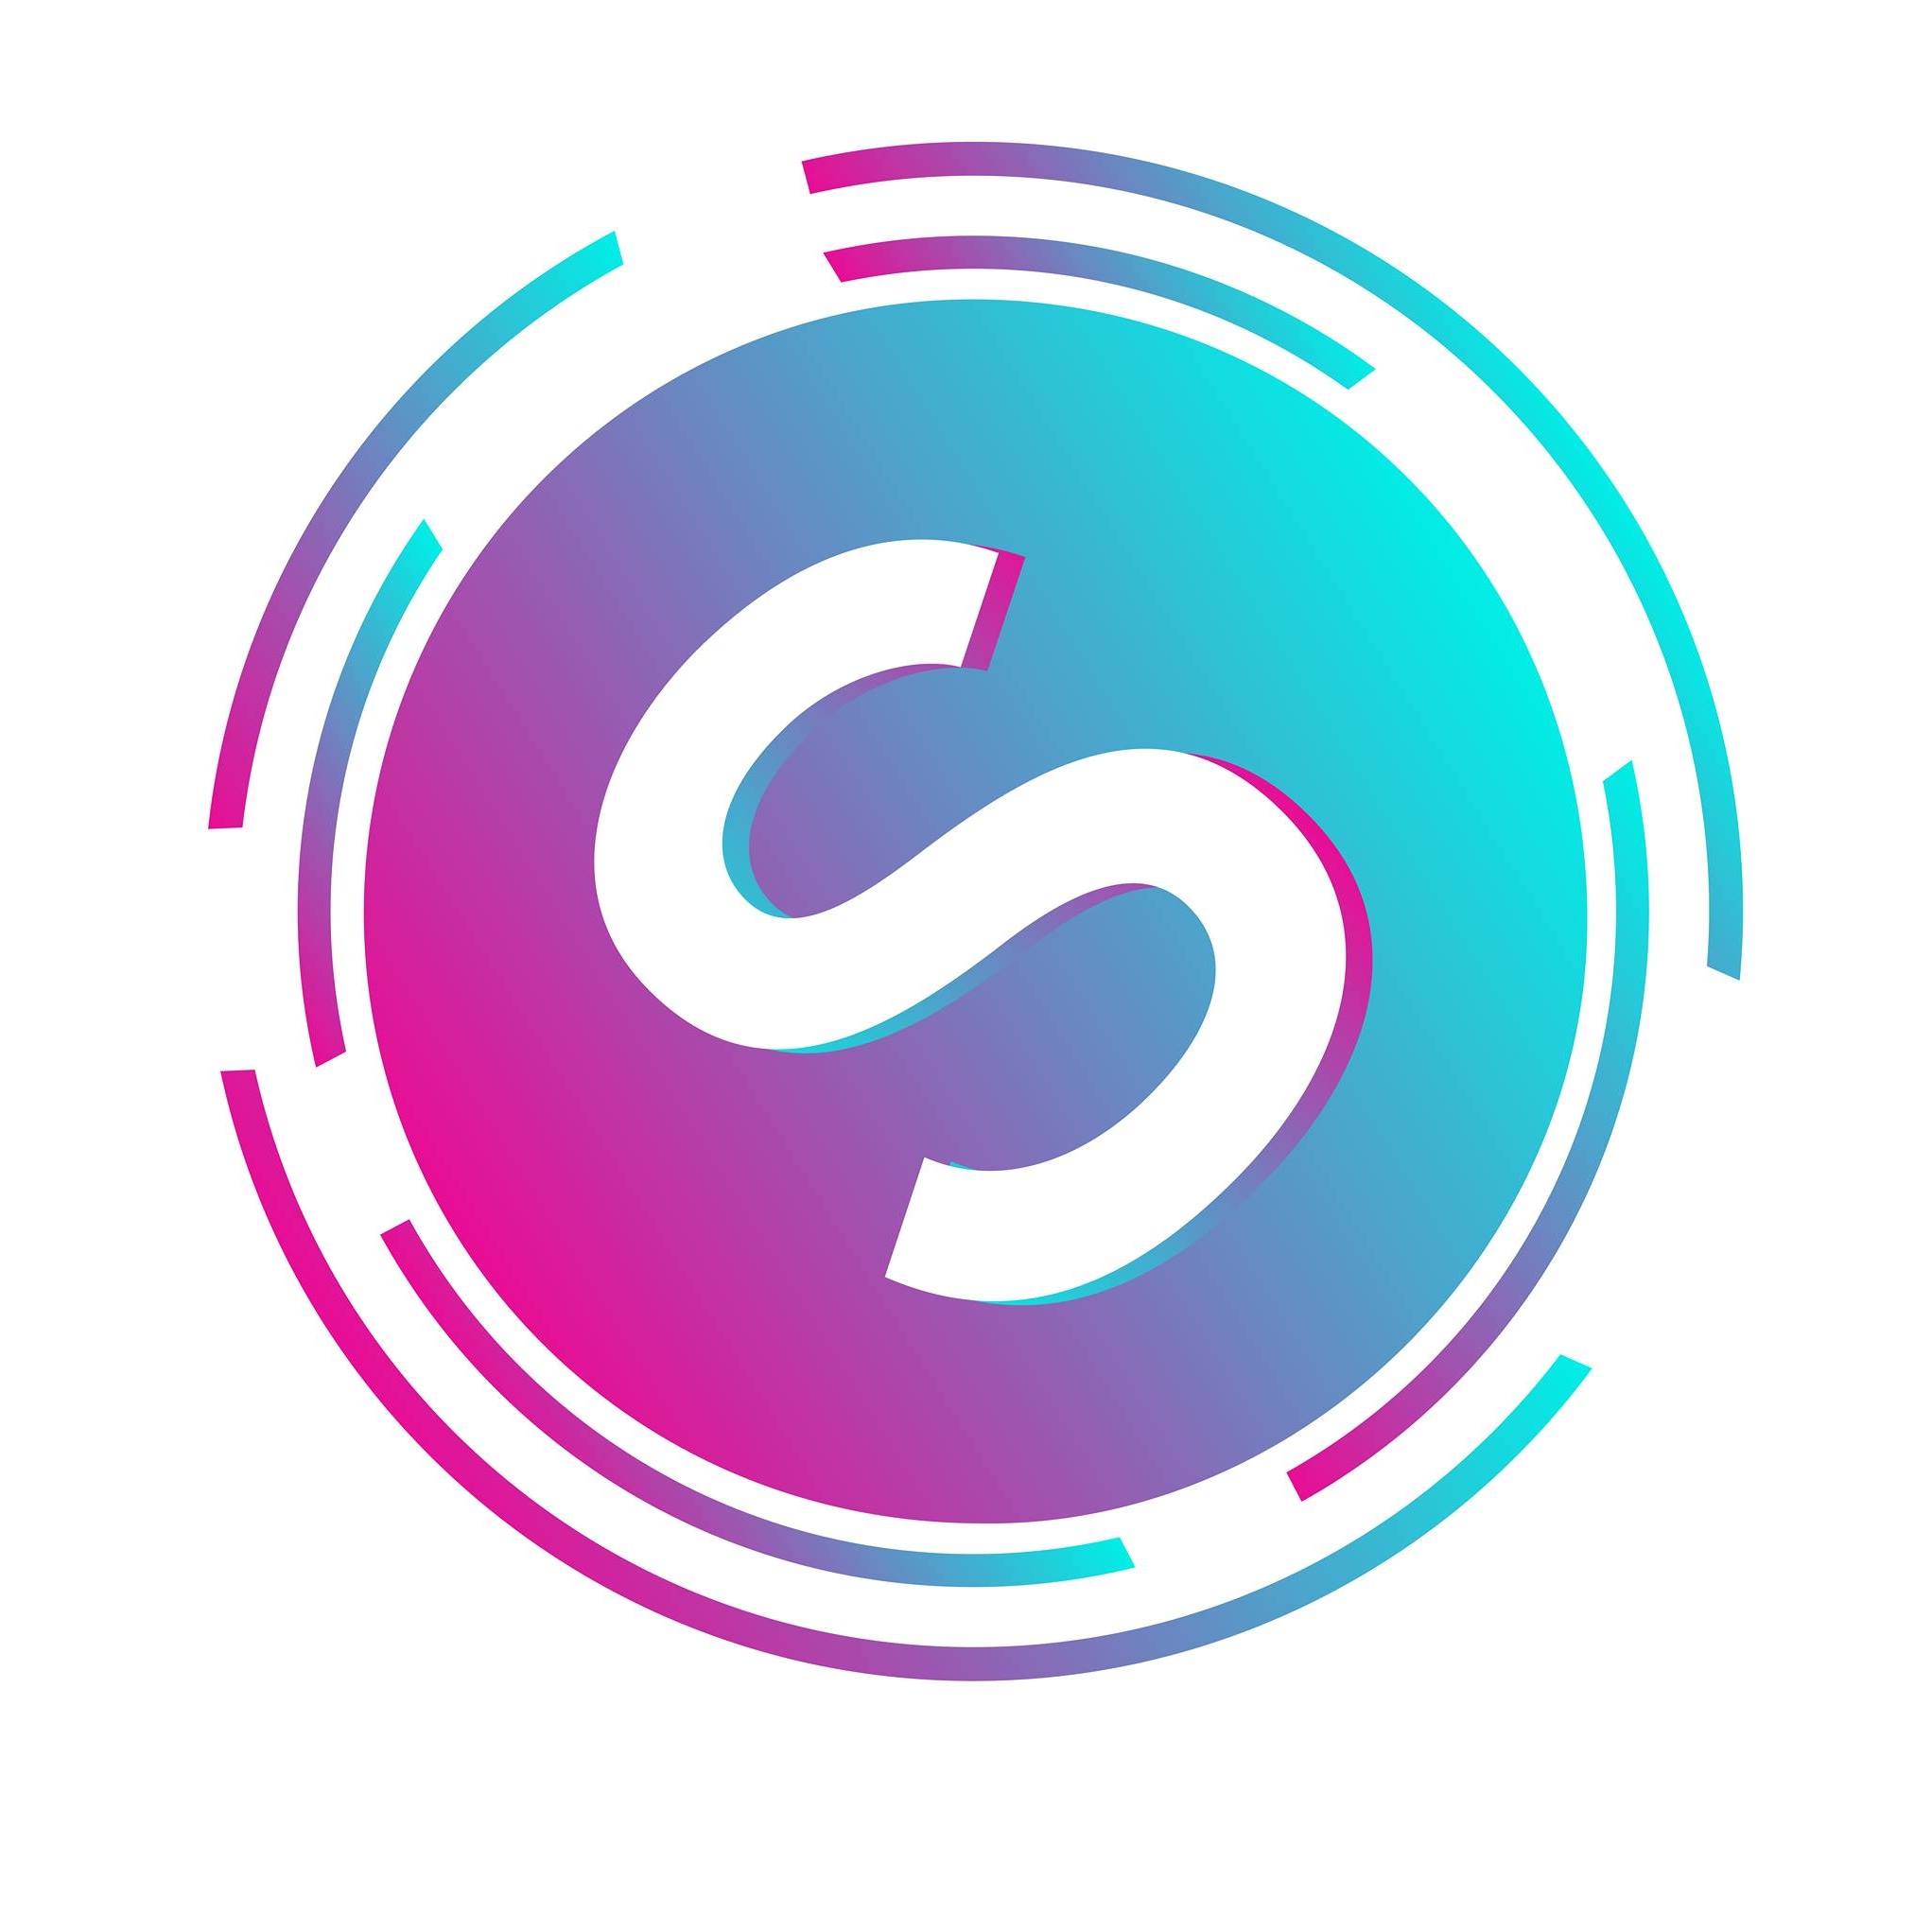 Spotcovery logo